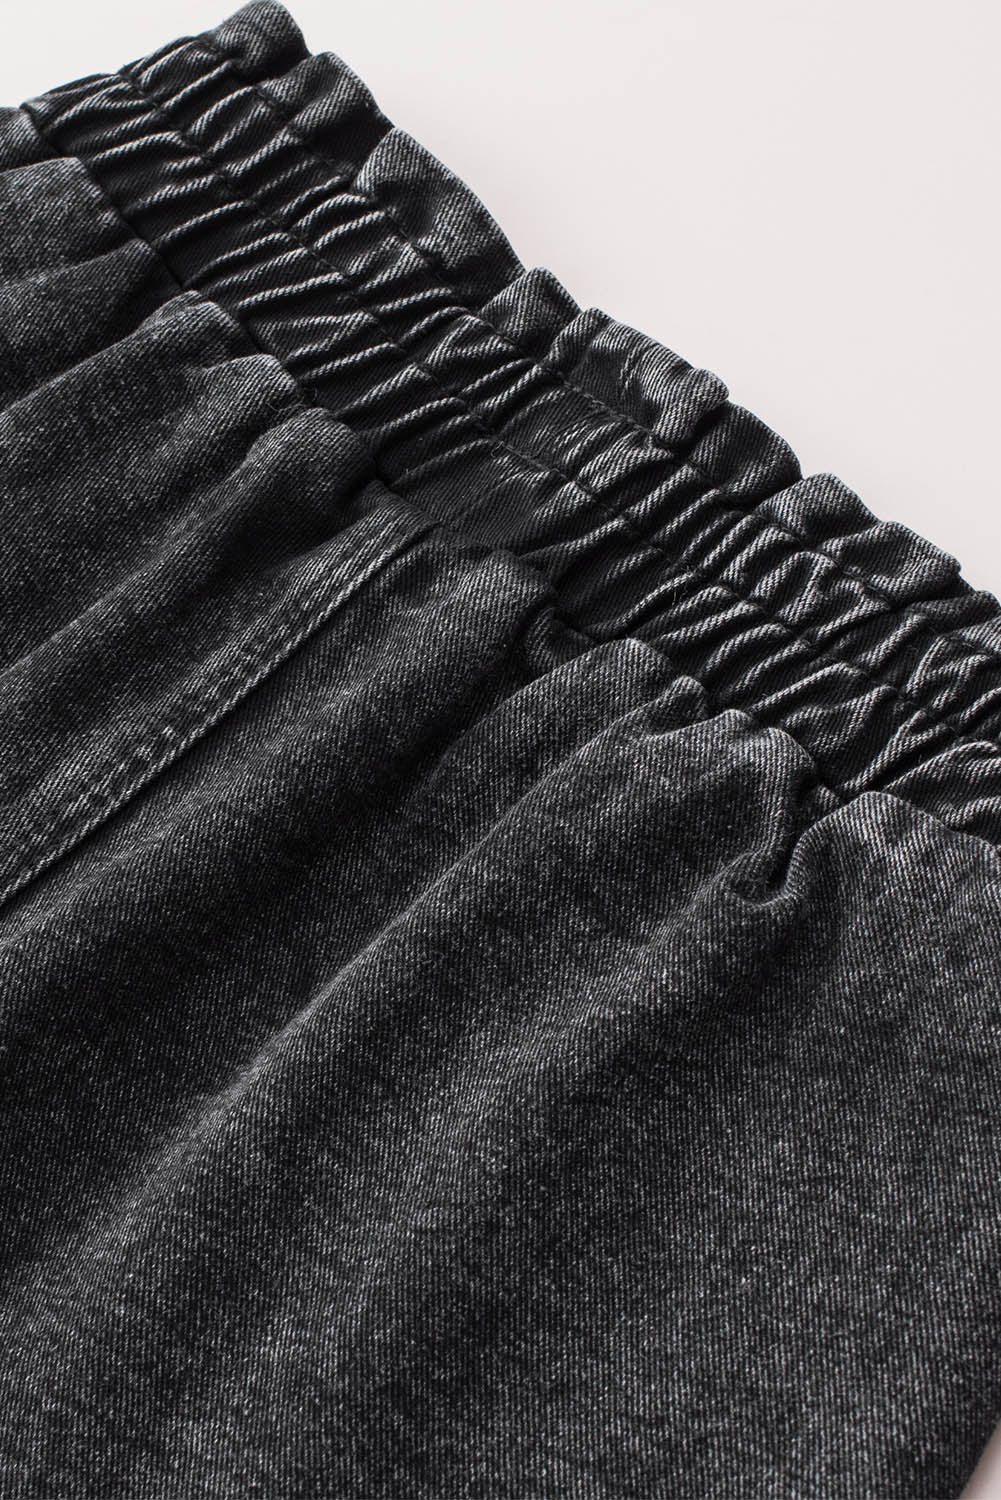 Black Retro Bleach-washed Ruffled Elastic High Waist Denim Shorts